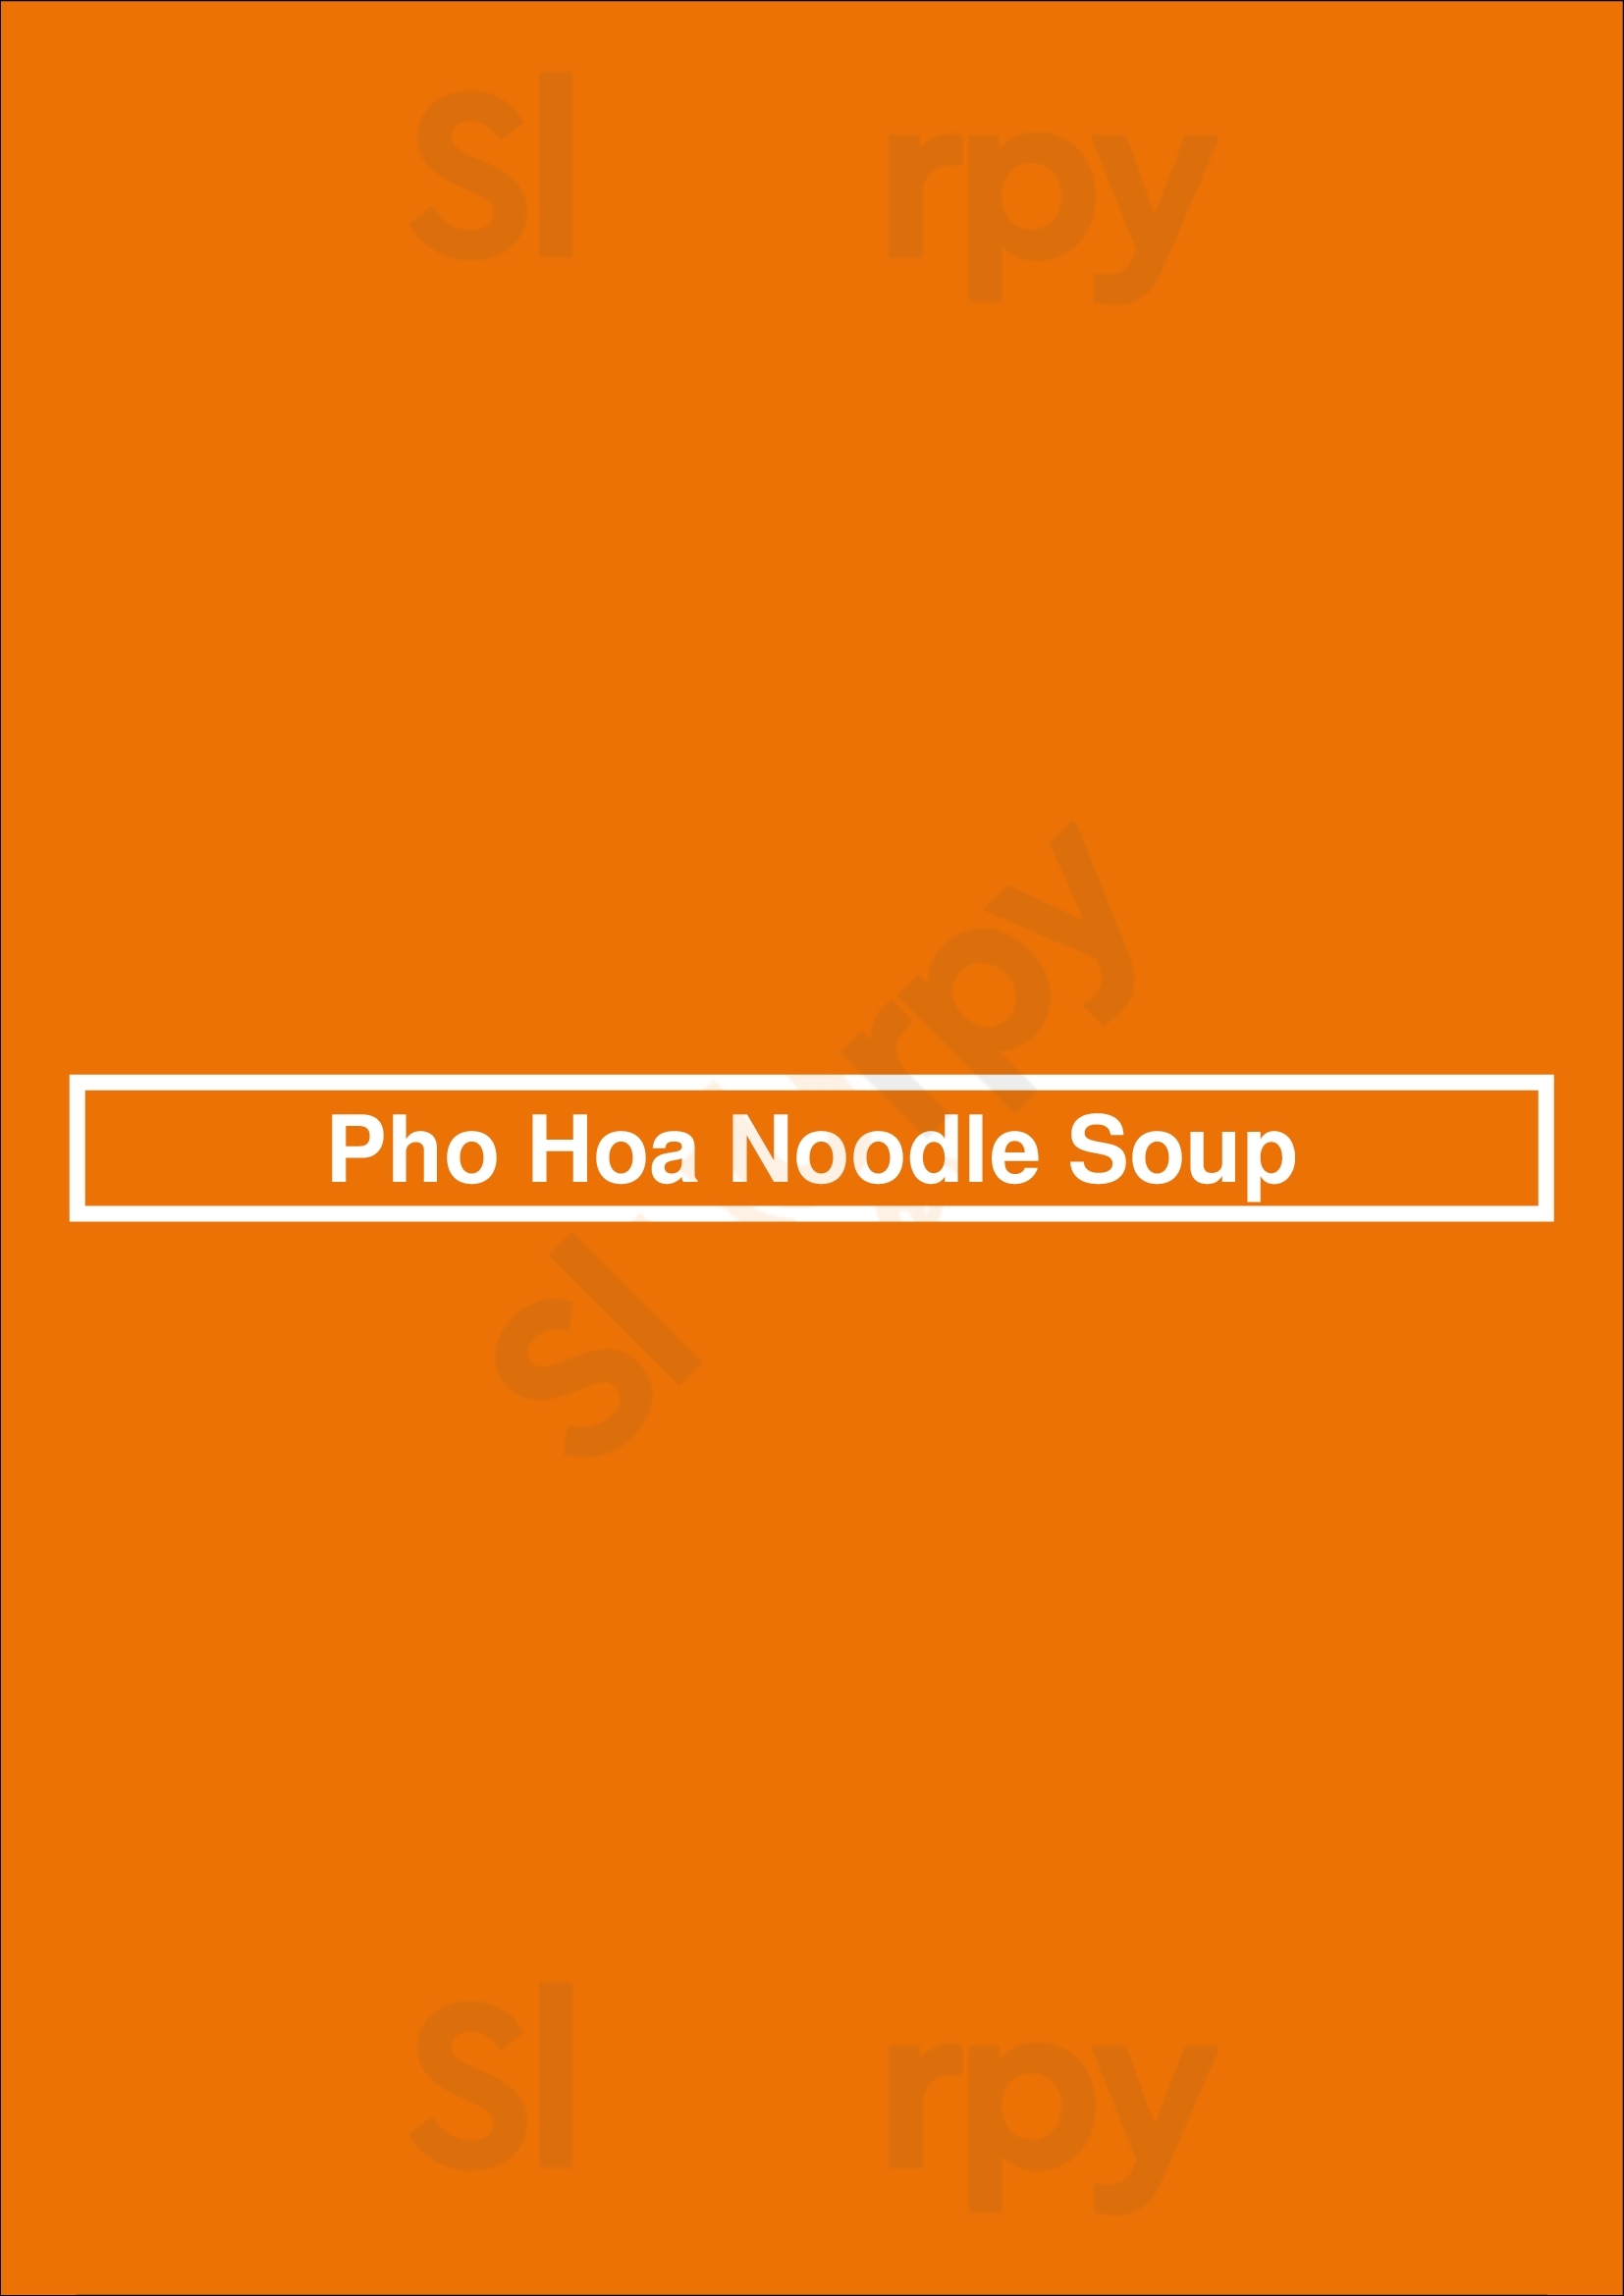 Pho Hoa Noodle Soup Surrey Menu - 1